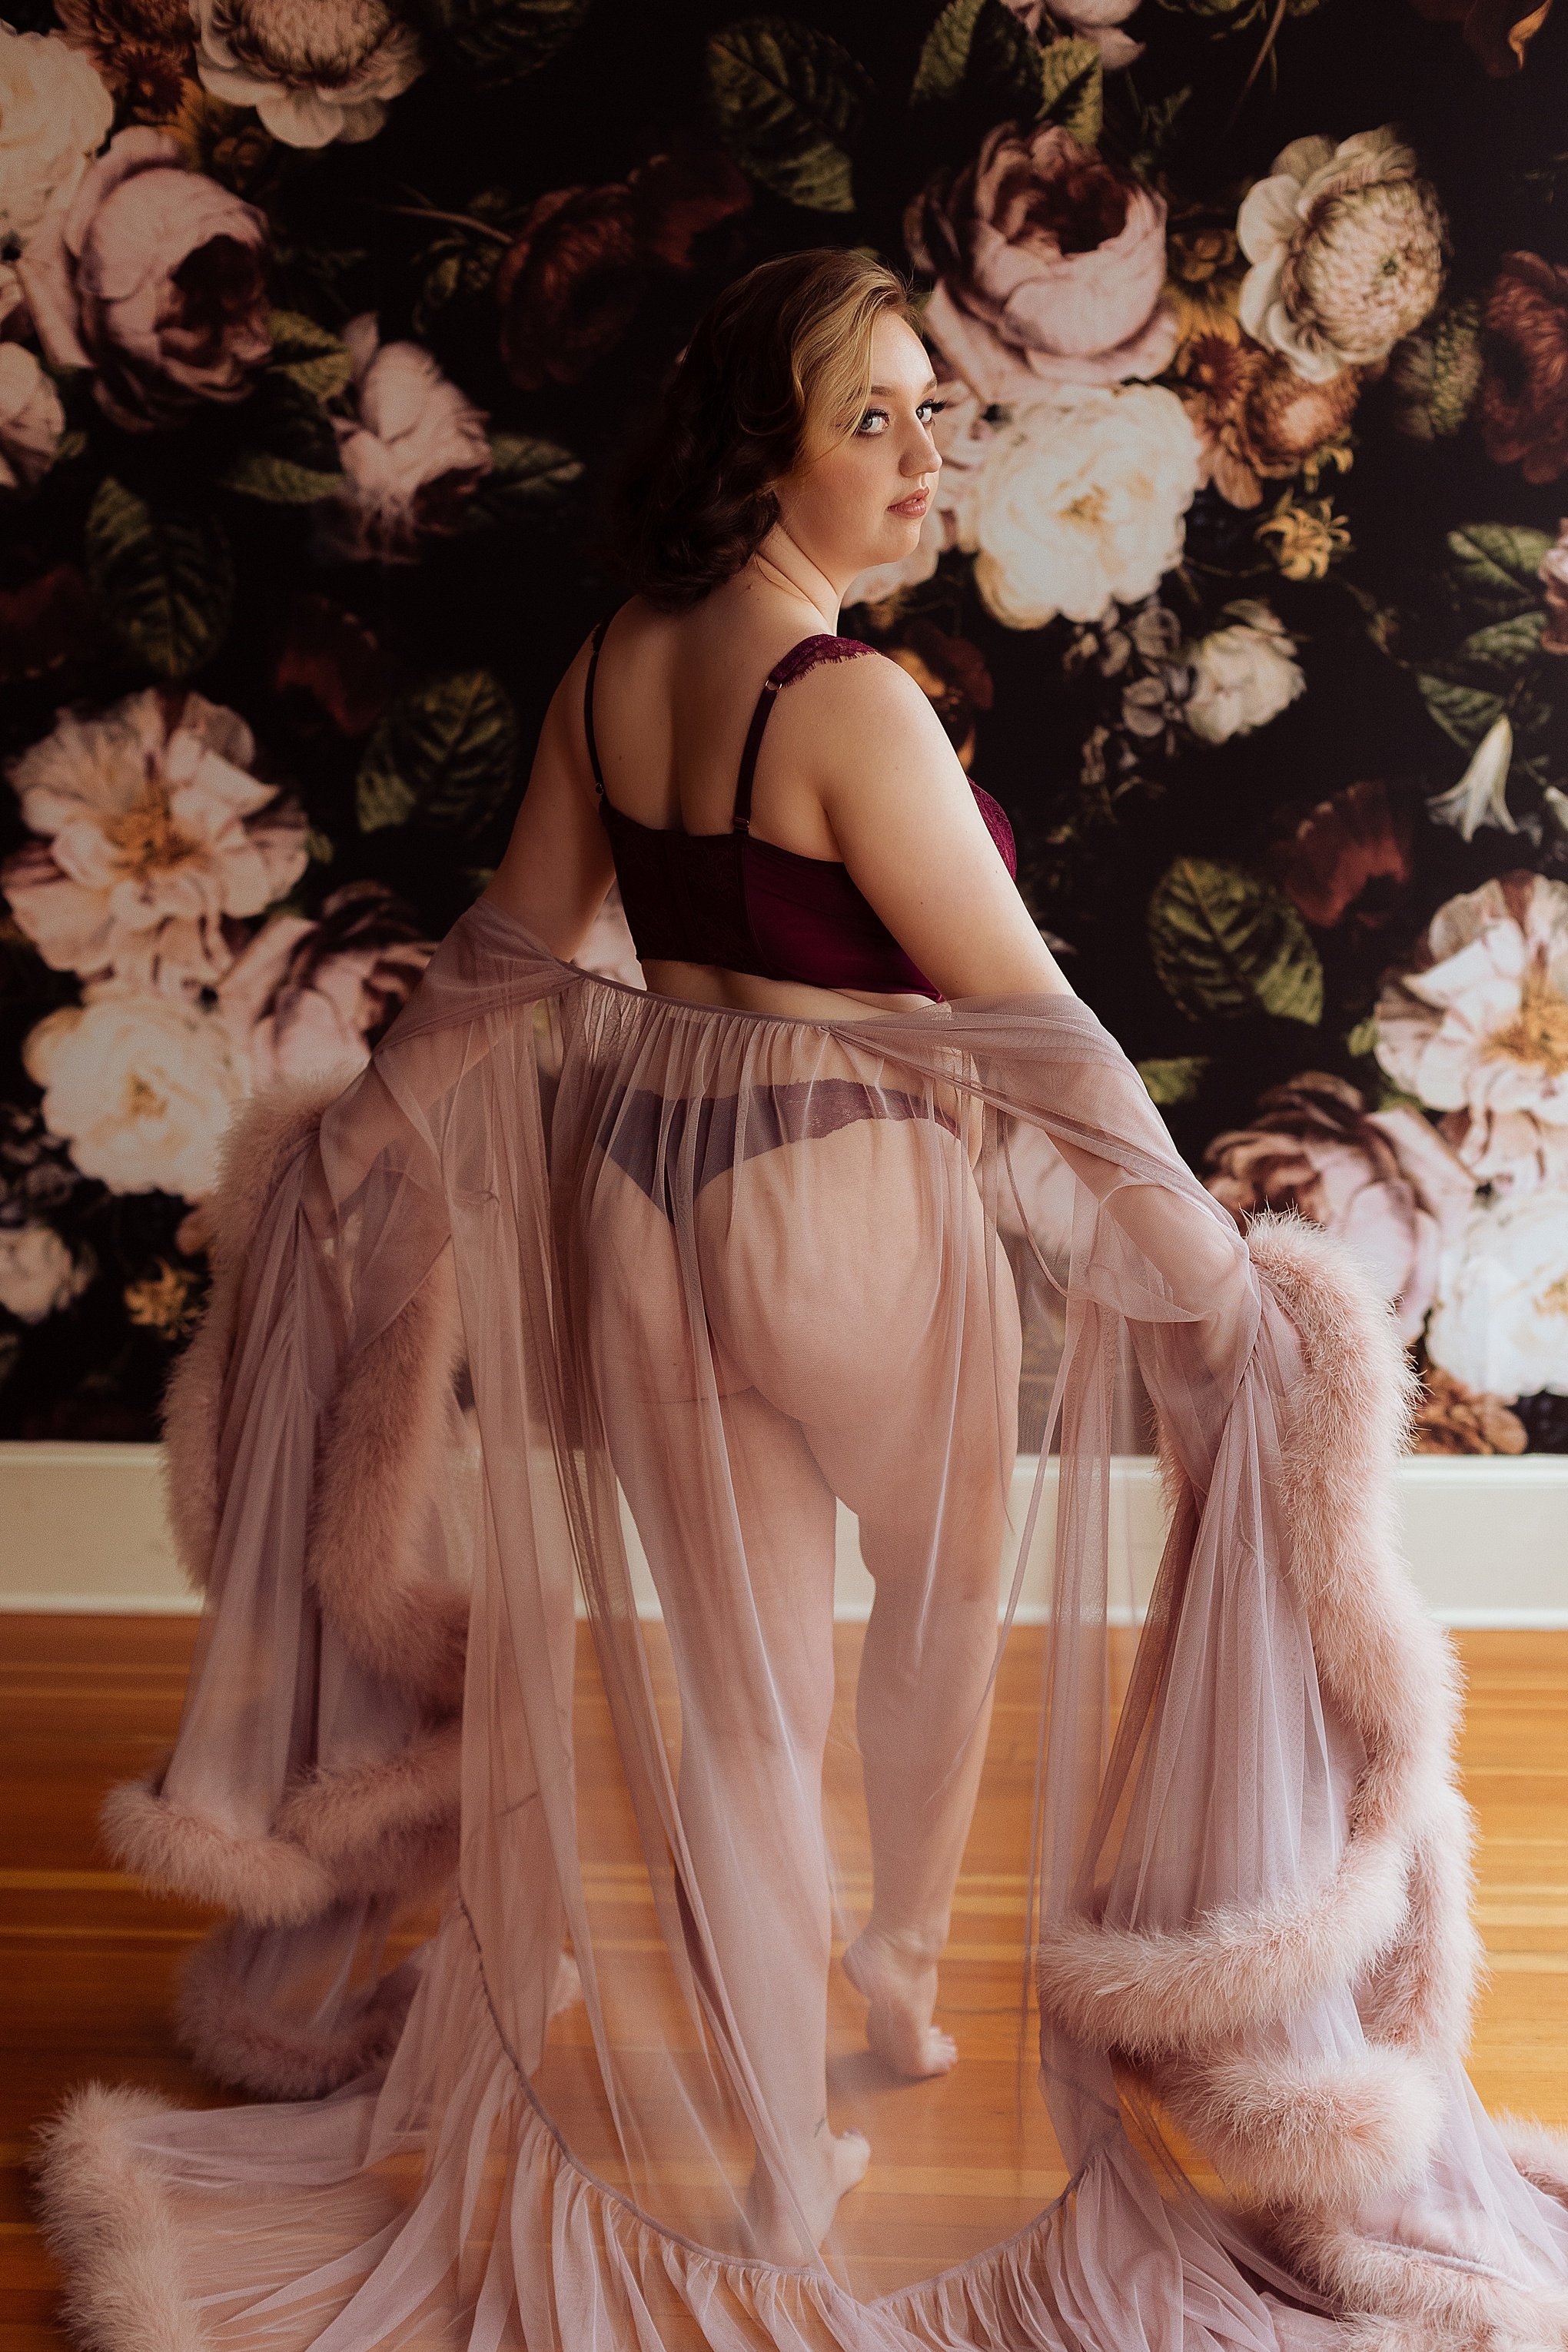 burlesque-inspired-boudoir-photos-2.jpg